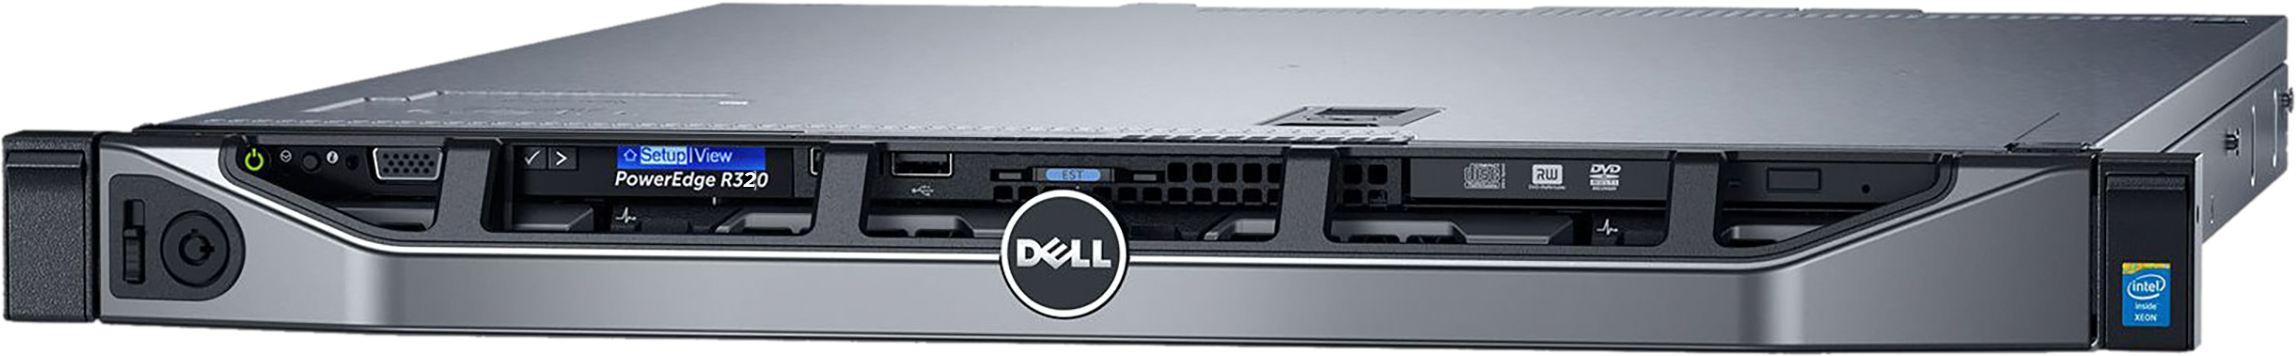 Аренда физического сервера Dell R320 / E5-2420 v2 / 8 GB RAM / 4 × 4 TB HDD / H310